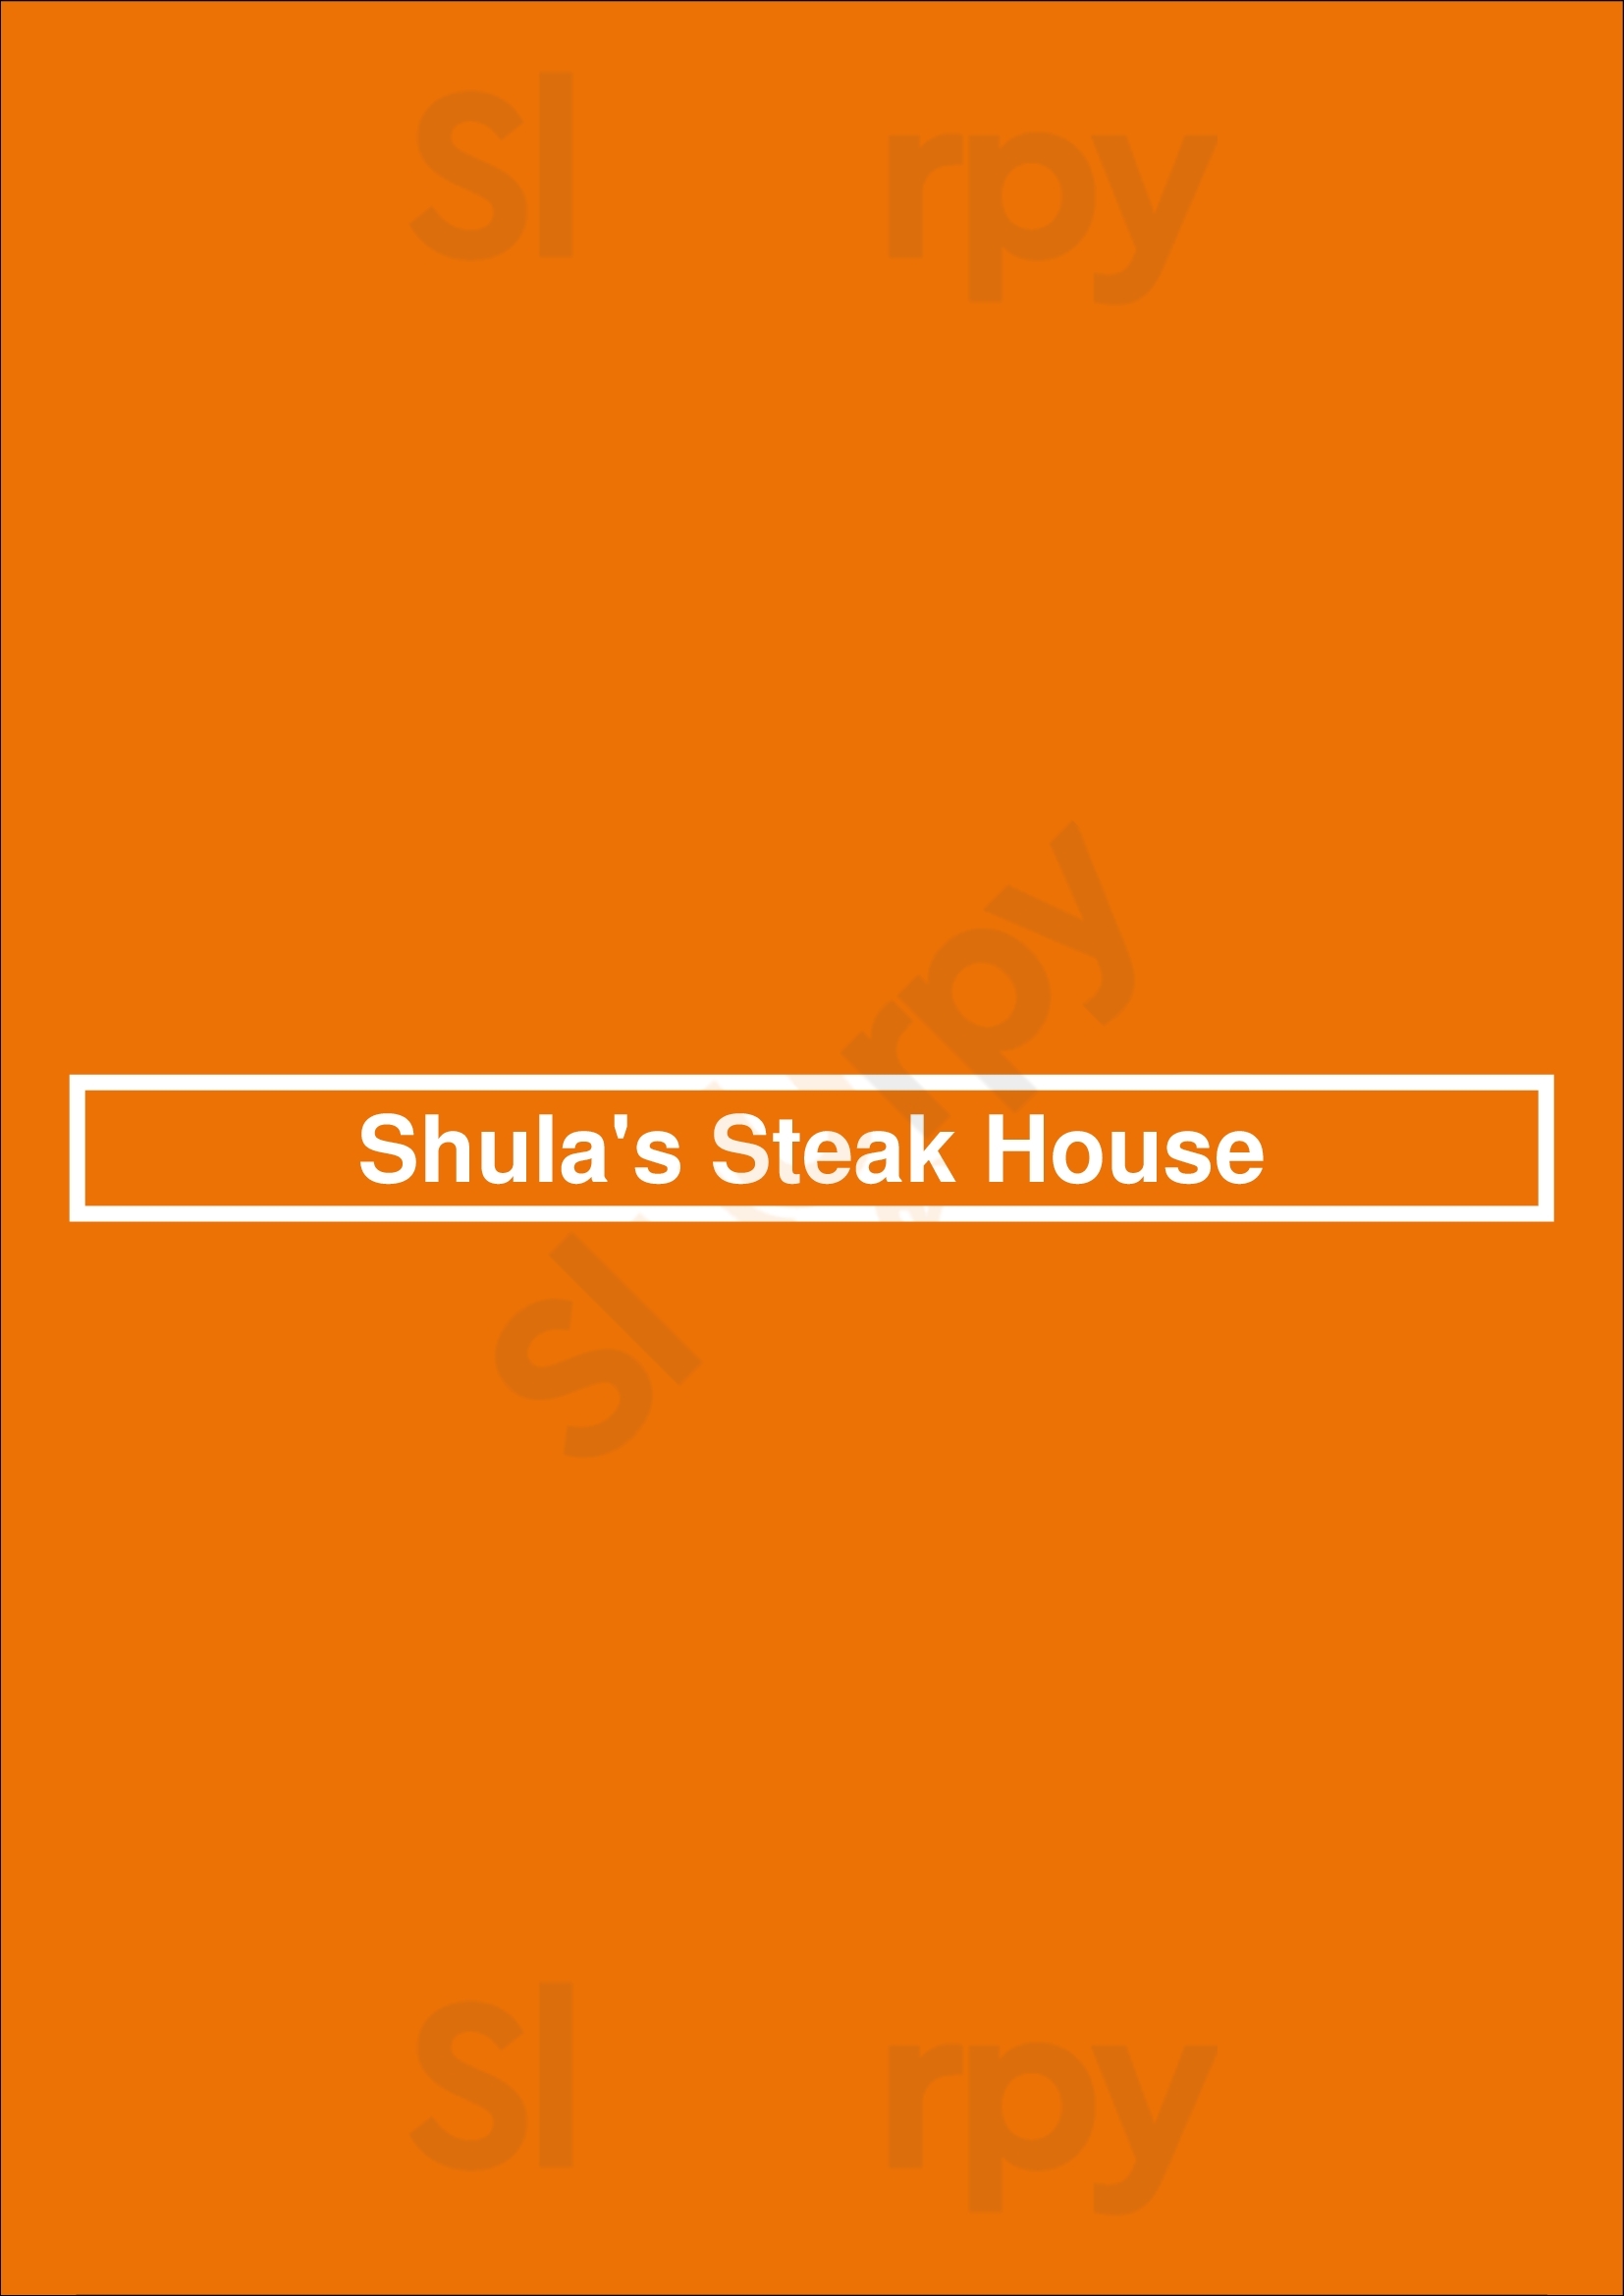 Shula's Steak House Houston Menu - 1